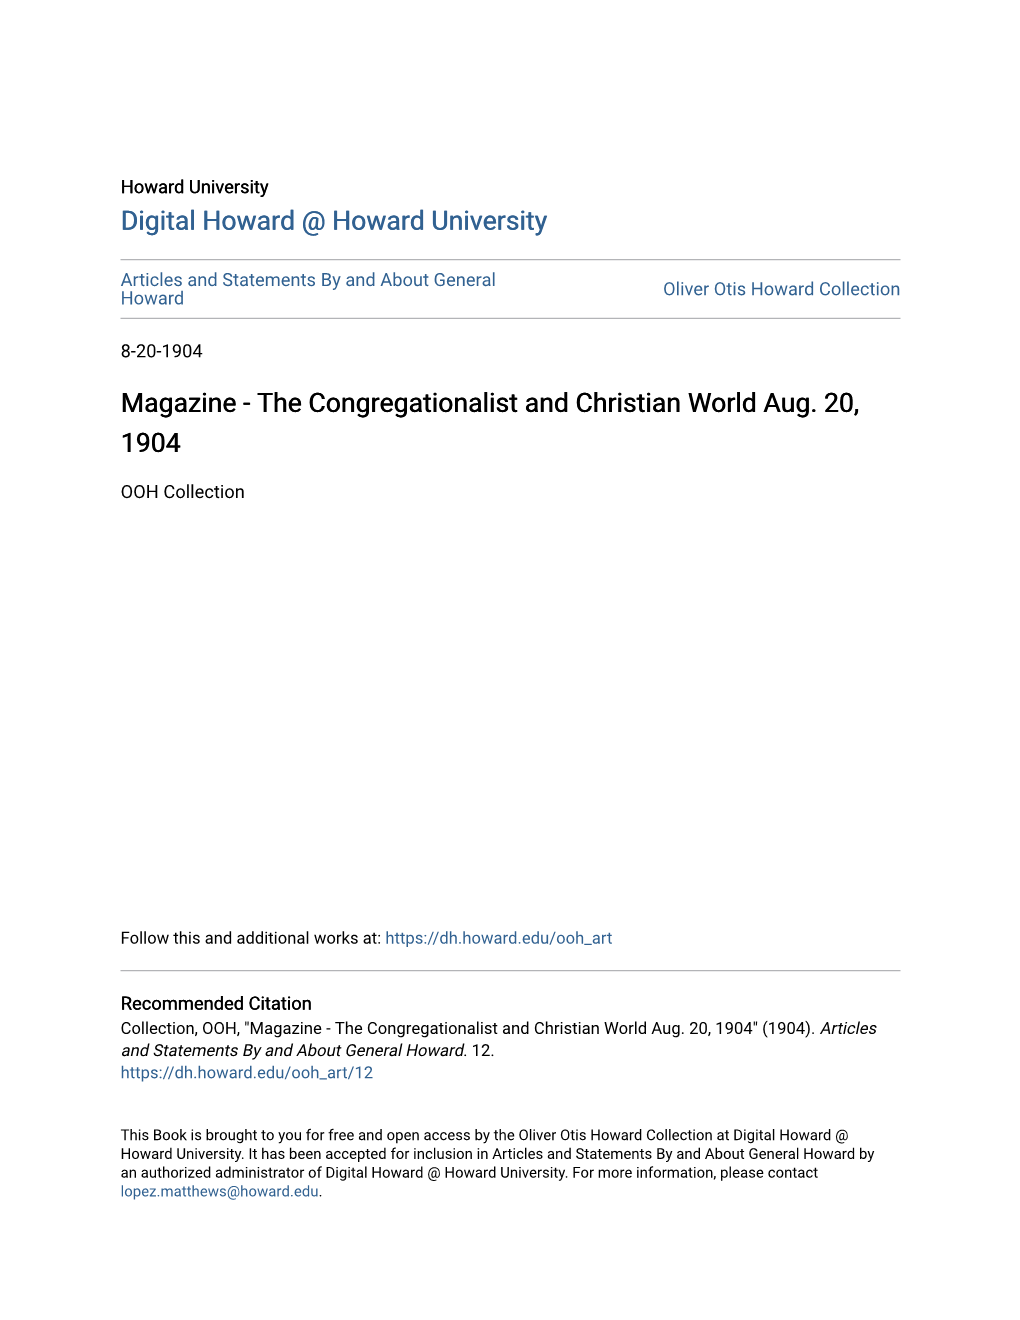 Magazine - the Congregationalist and Christian World Aug